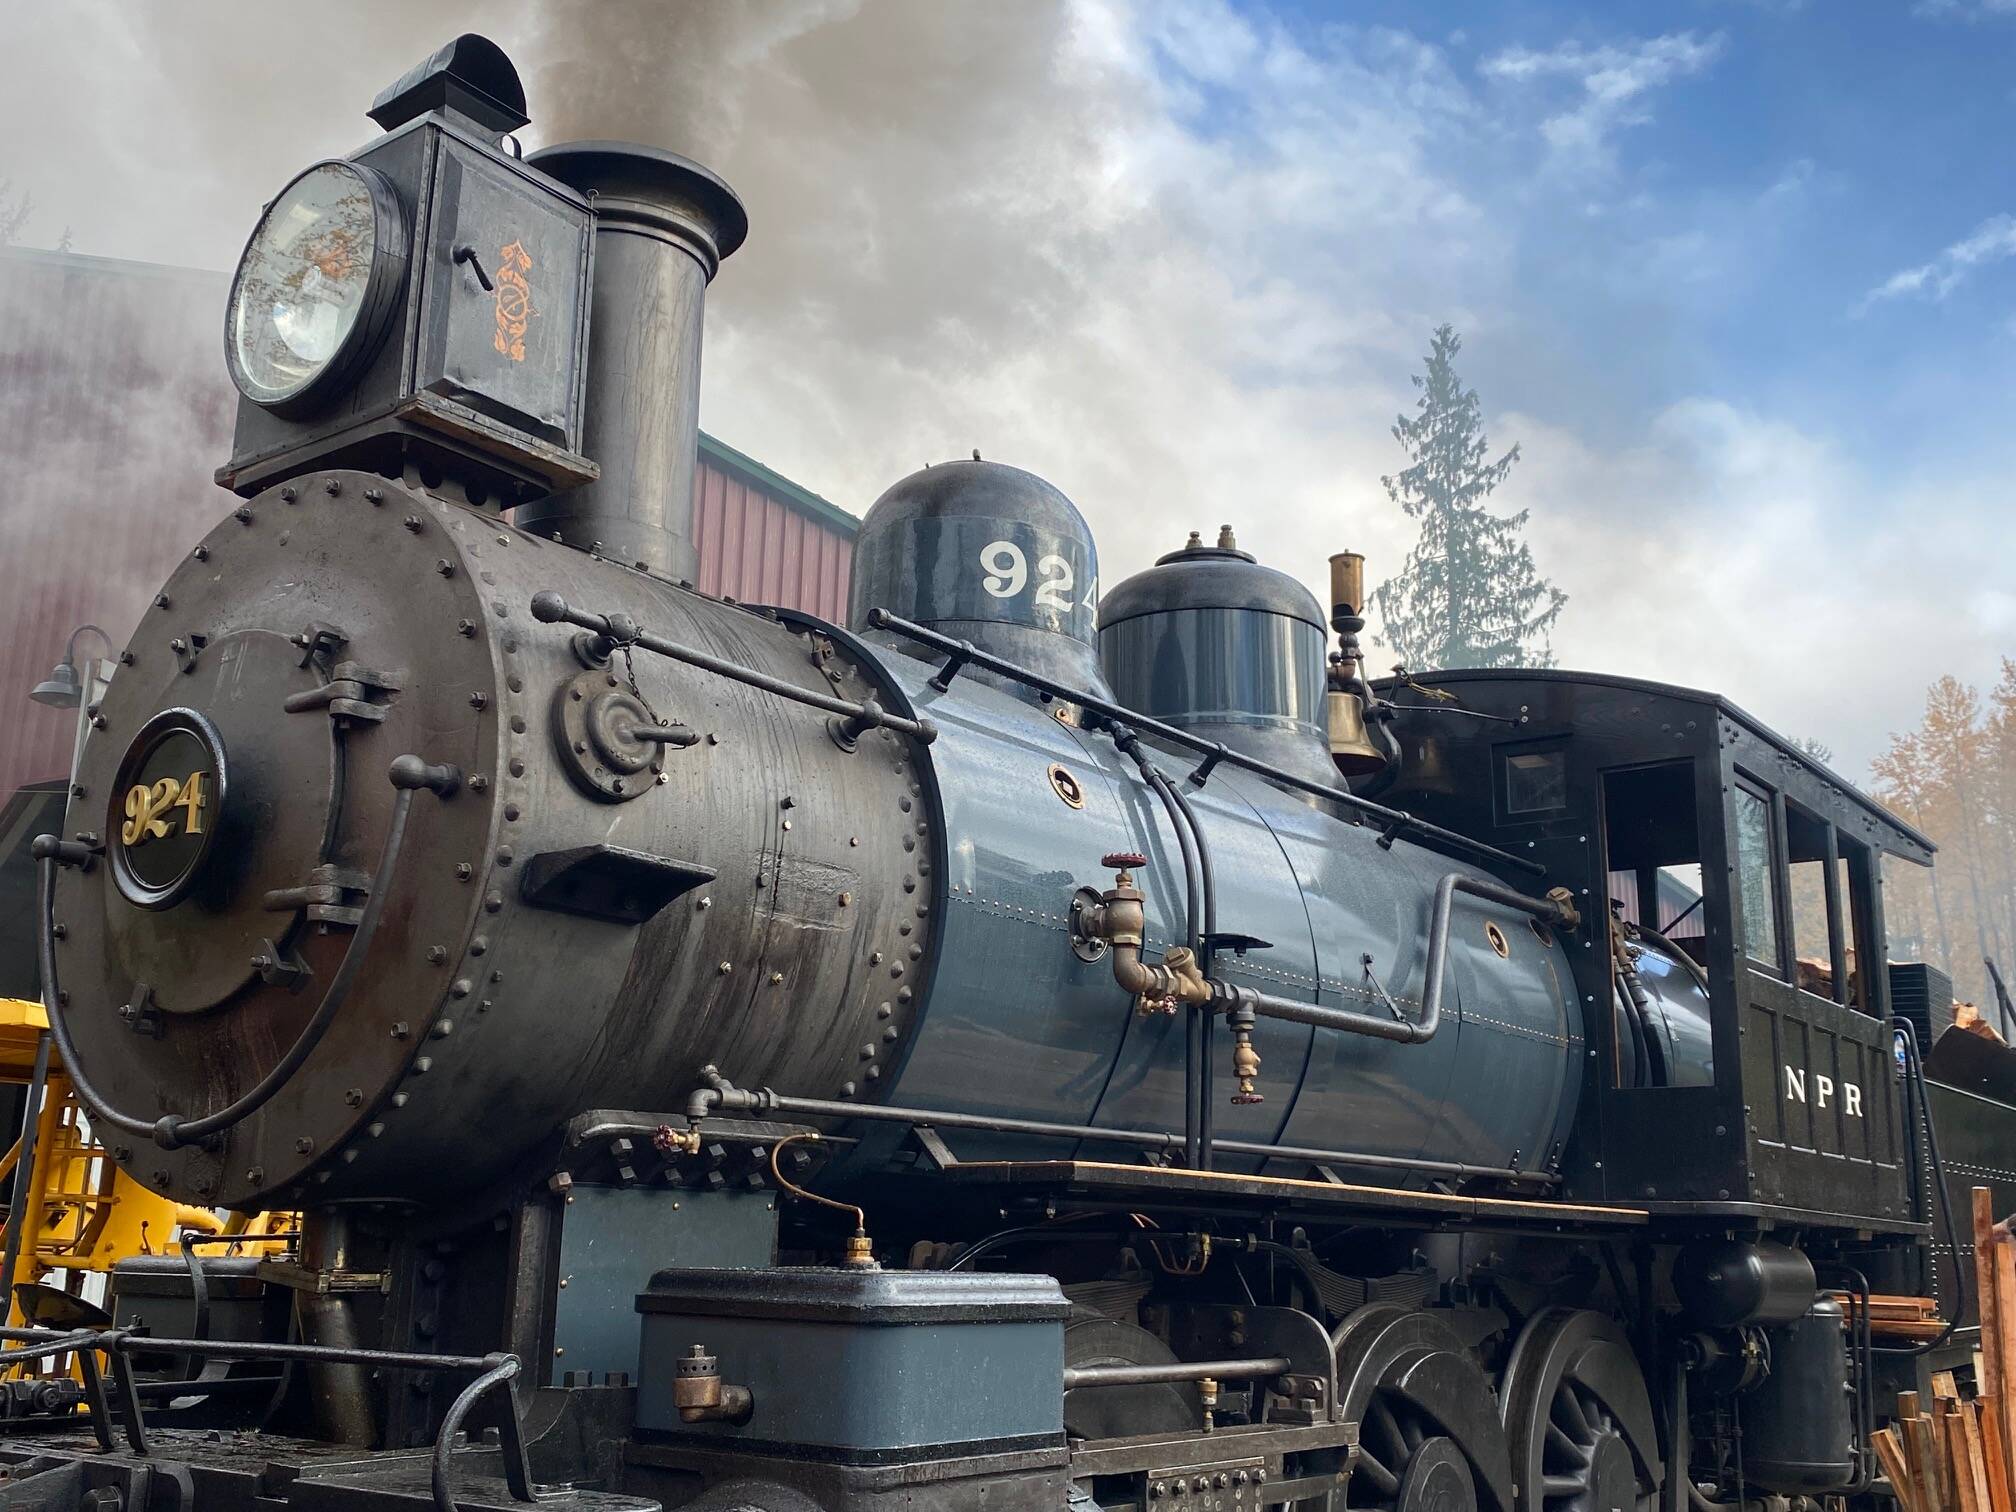 Northern Pacific 924 Steam Train.
Courtesy photo